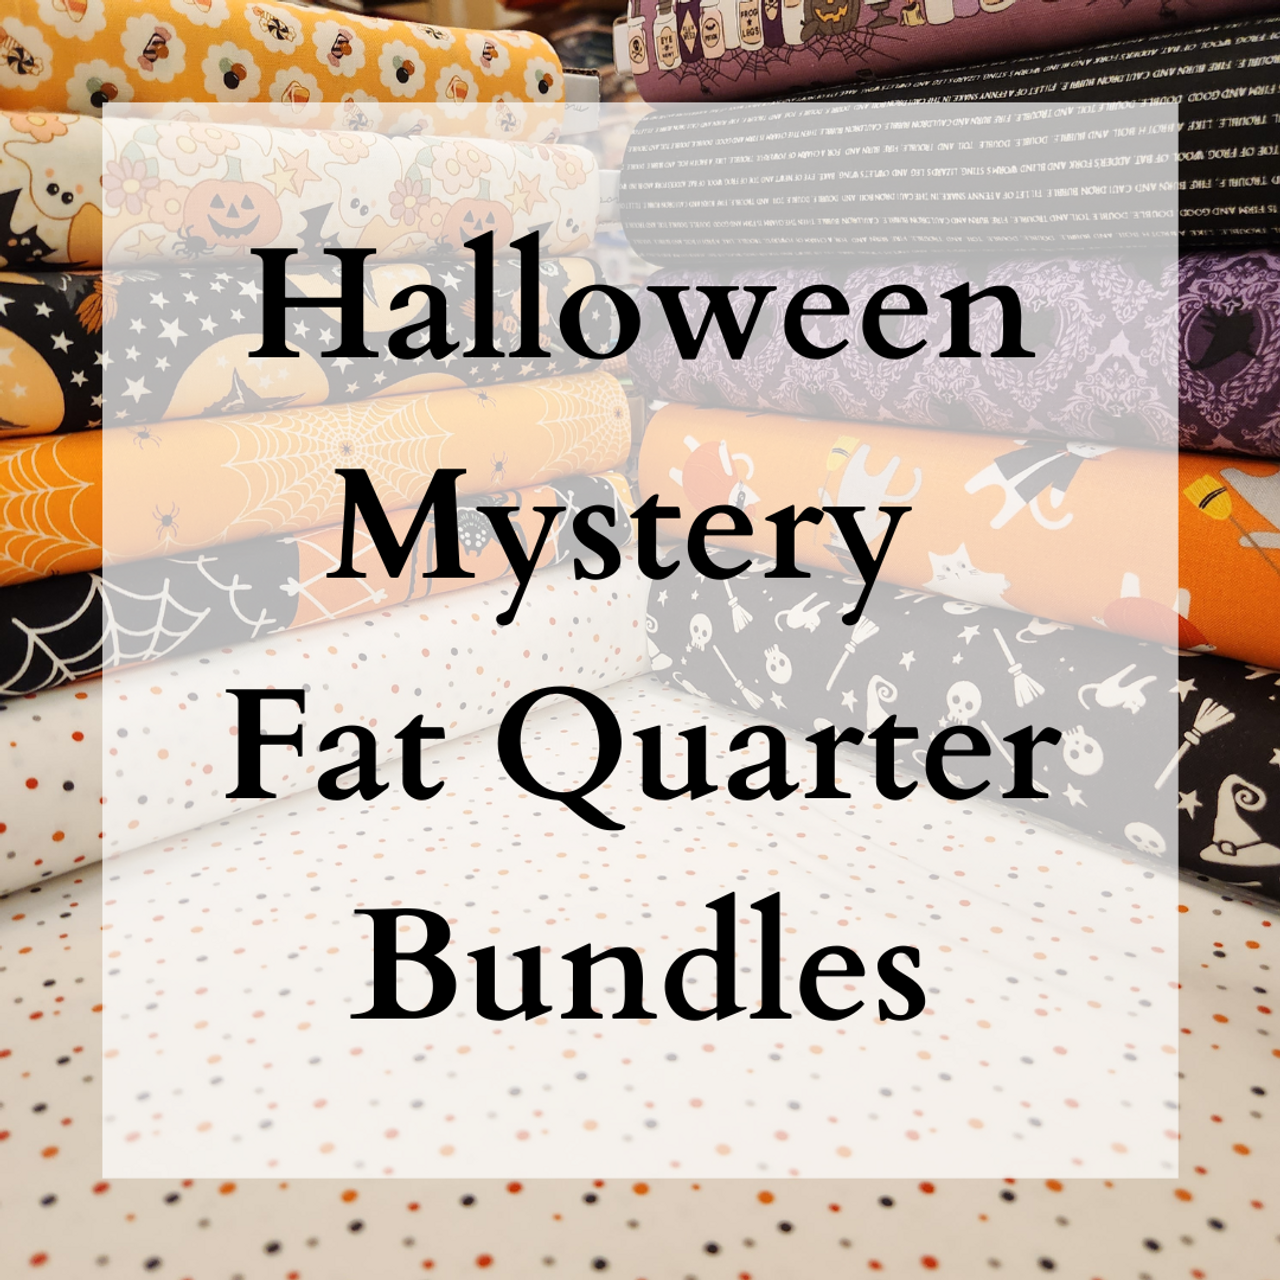 LIMITED EDITION - Halloween Mystery Fat Quarters - 10 Fat Quarter Bundles